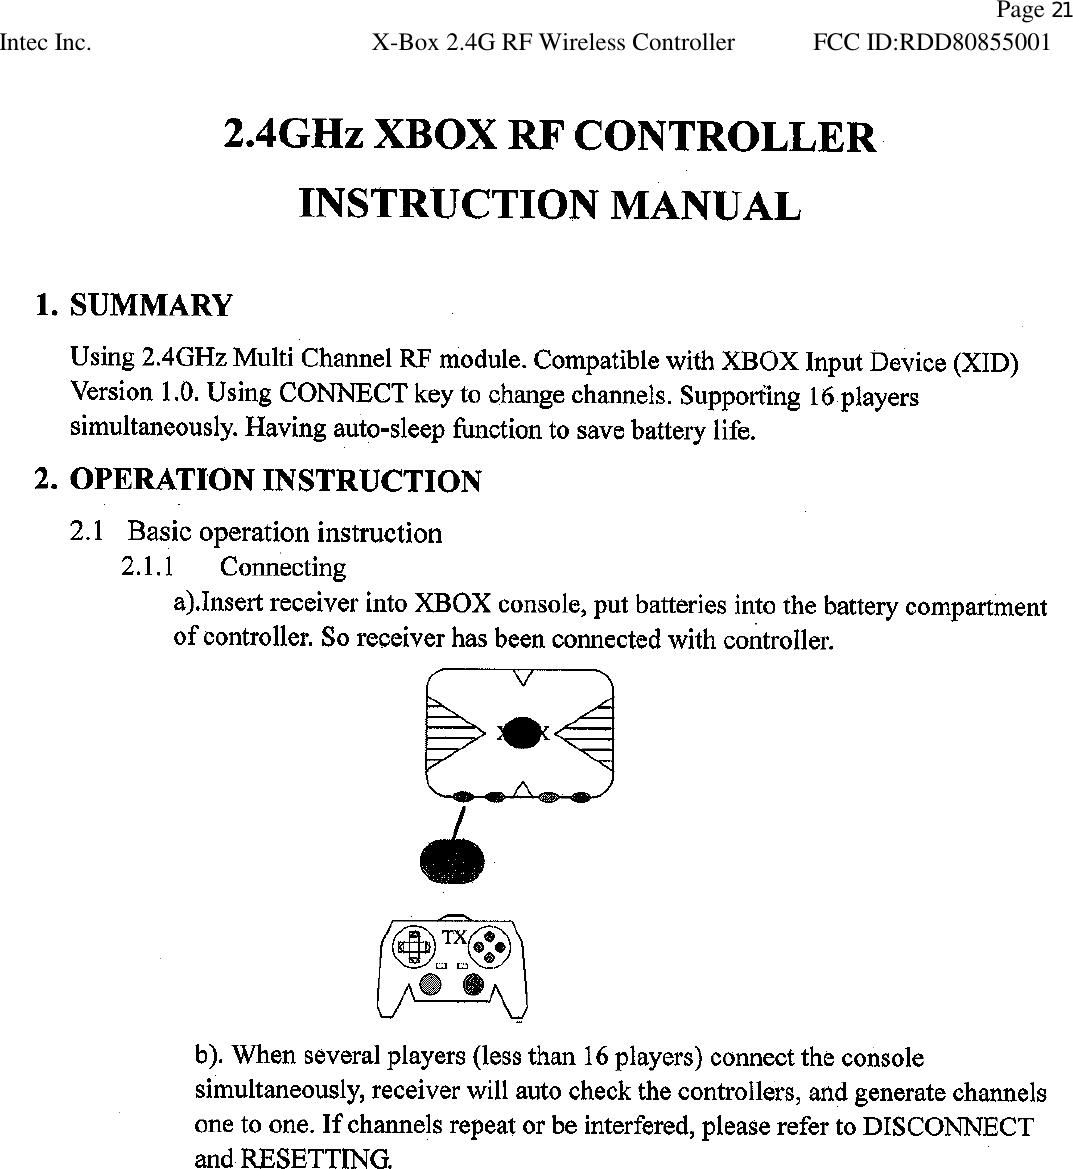                Page 21 Intec Inc. X-Box 2.4G RF Wireless Controller FCC ID:RDD80855001   